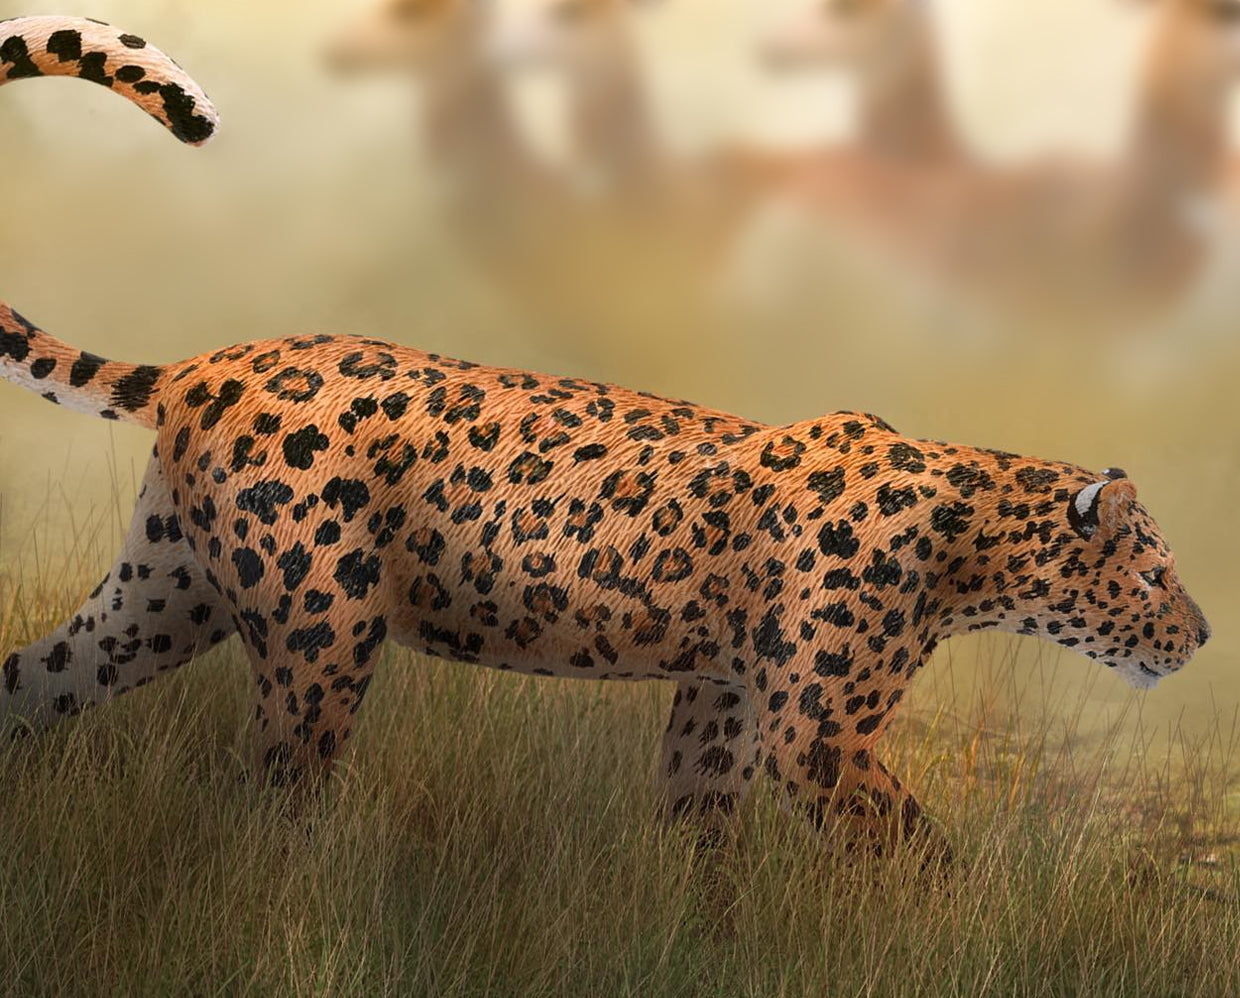 CollectA King Figurine - Cheetah